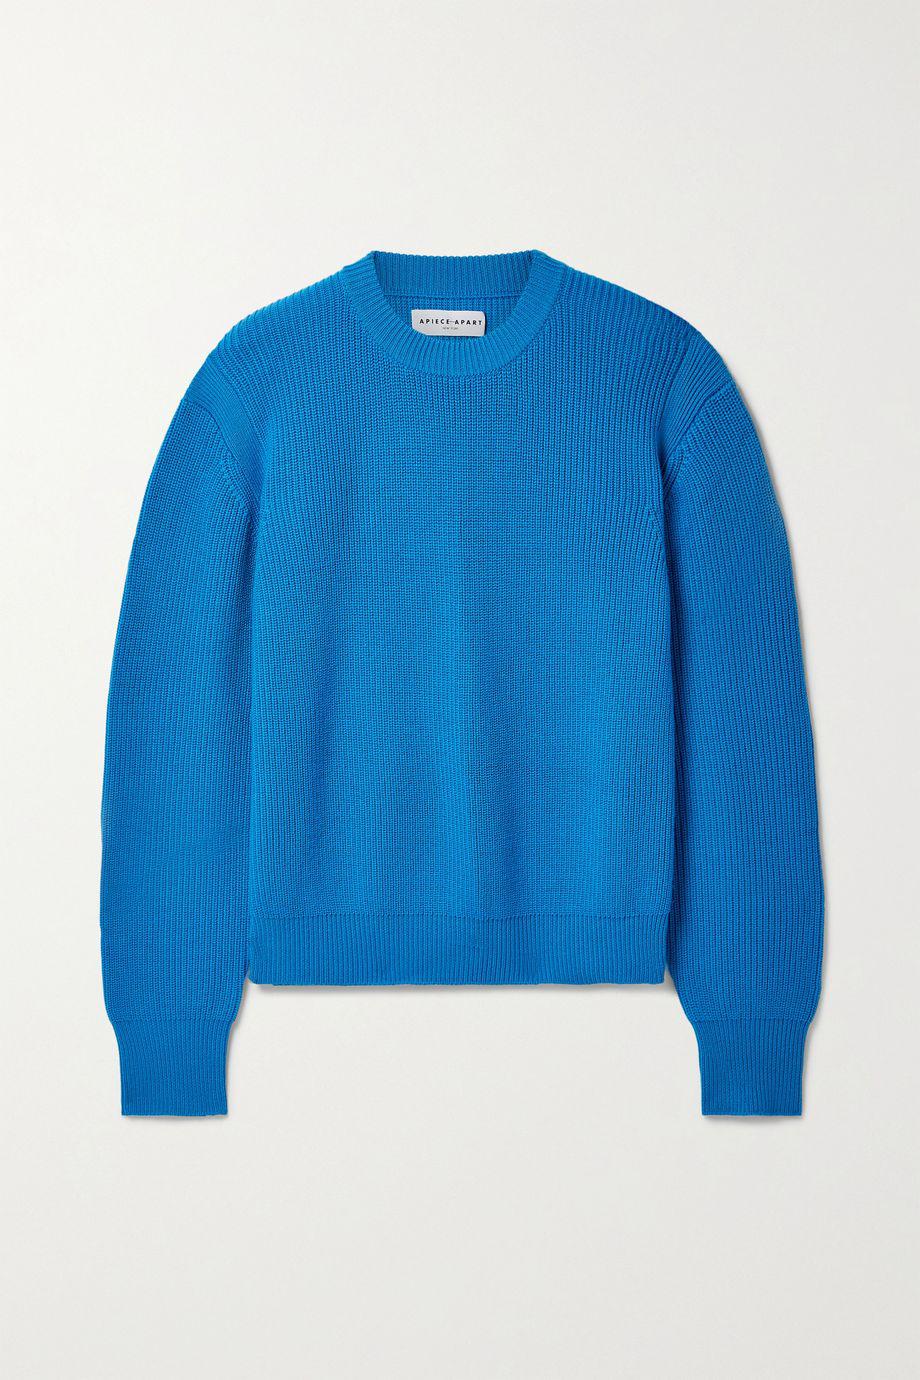 Everyday merino wool sweater by APIECE APART